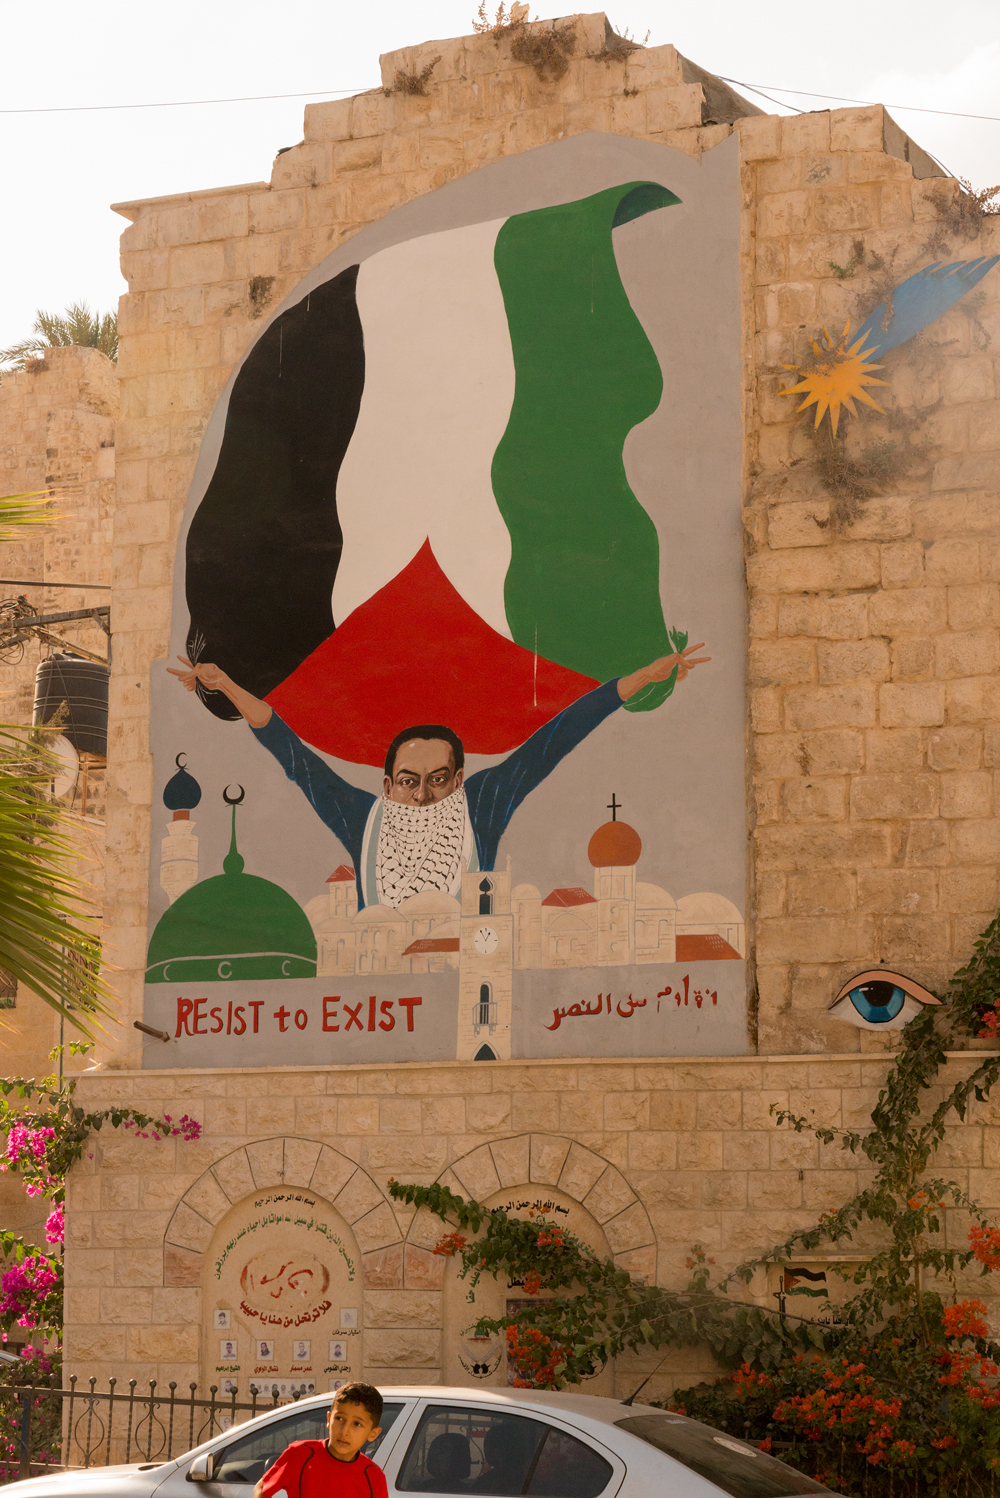 Nablus Resist to Exist